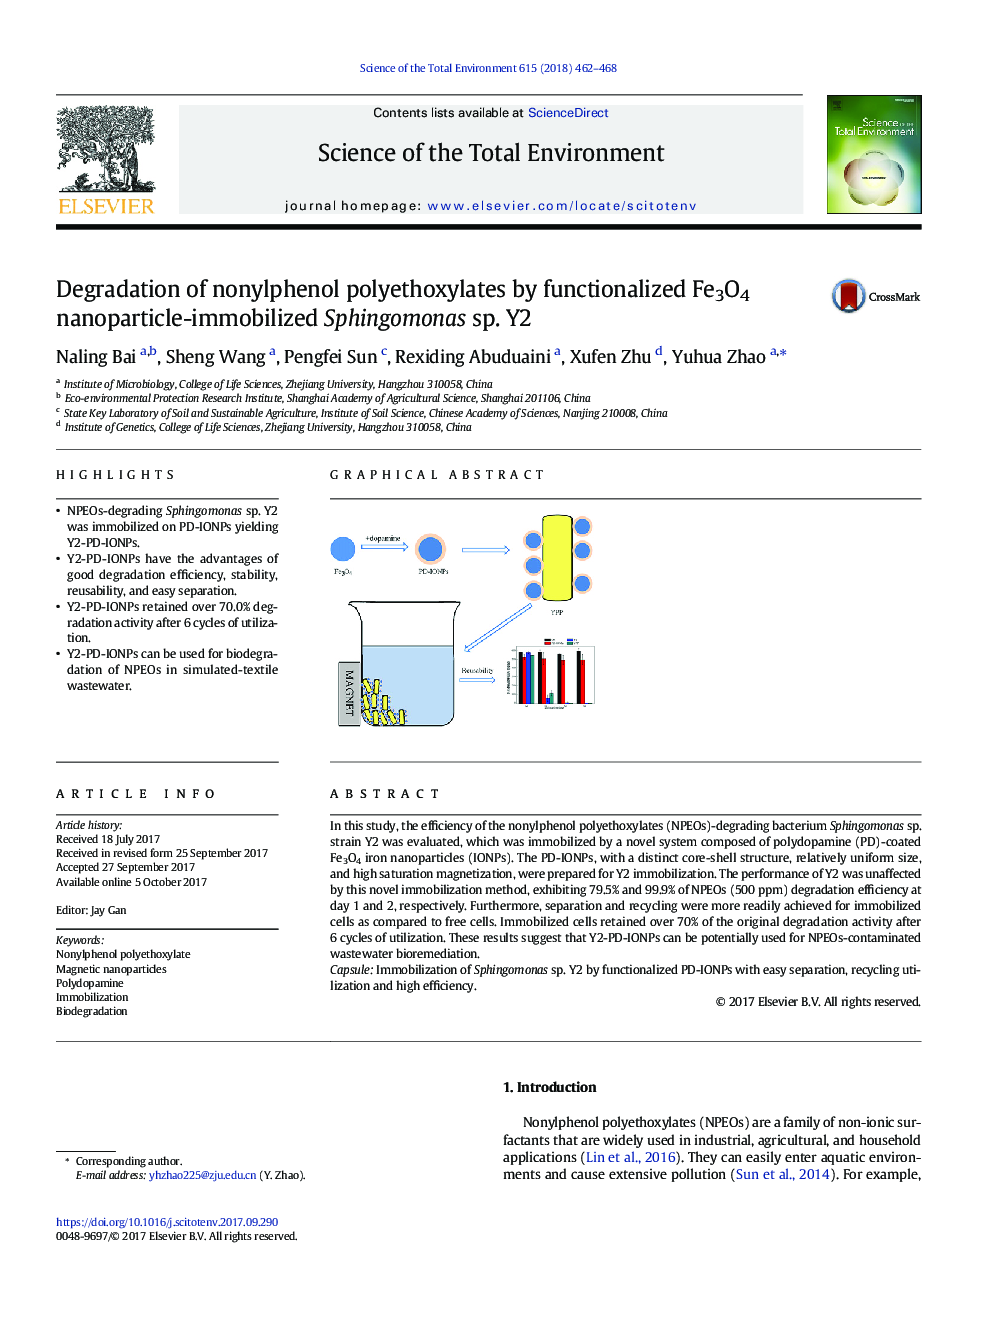 Degradation of nonylphenol polyethoxylates by functionalized Fe3O4 nanoparticle-immobilized Sphingomonas sp. Y2